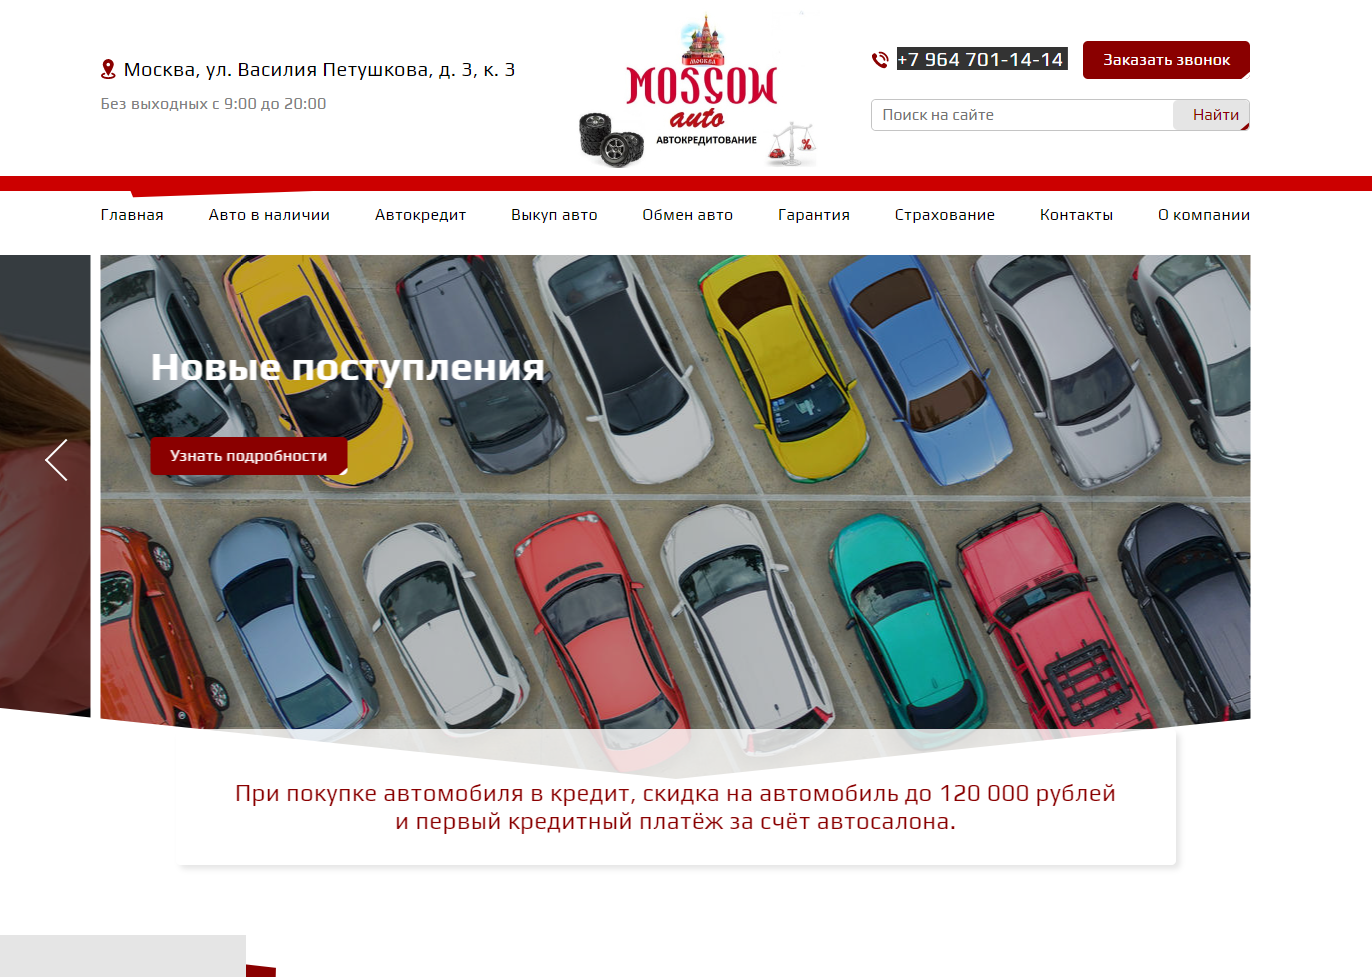 Автосалон Moscow Auto изображение сайта